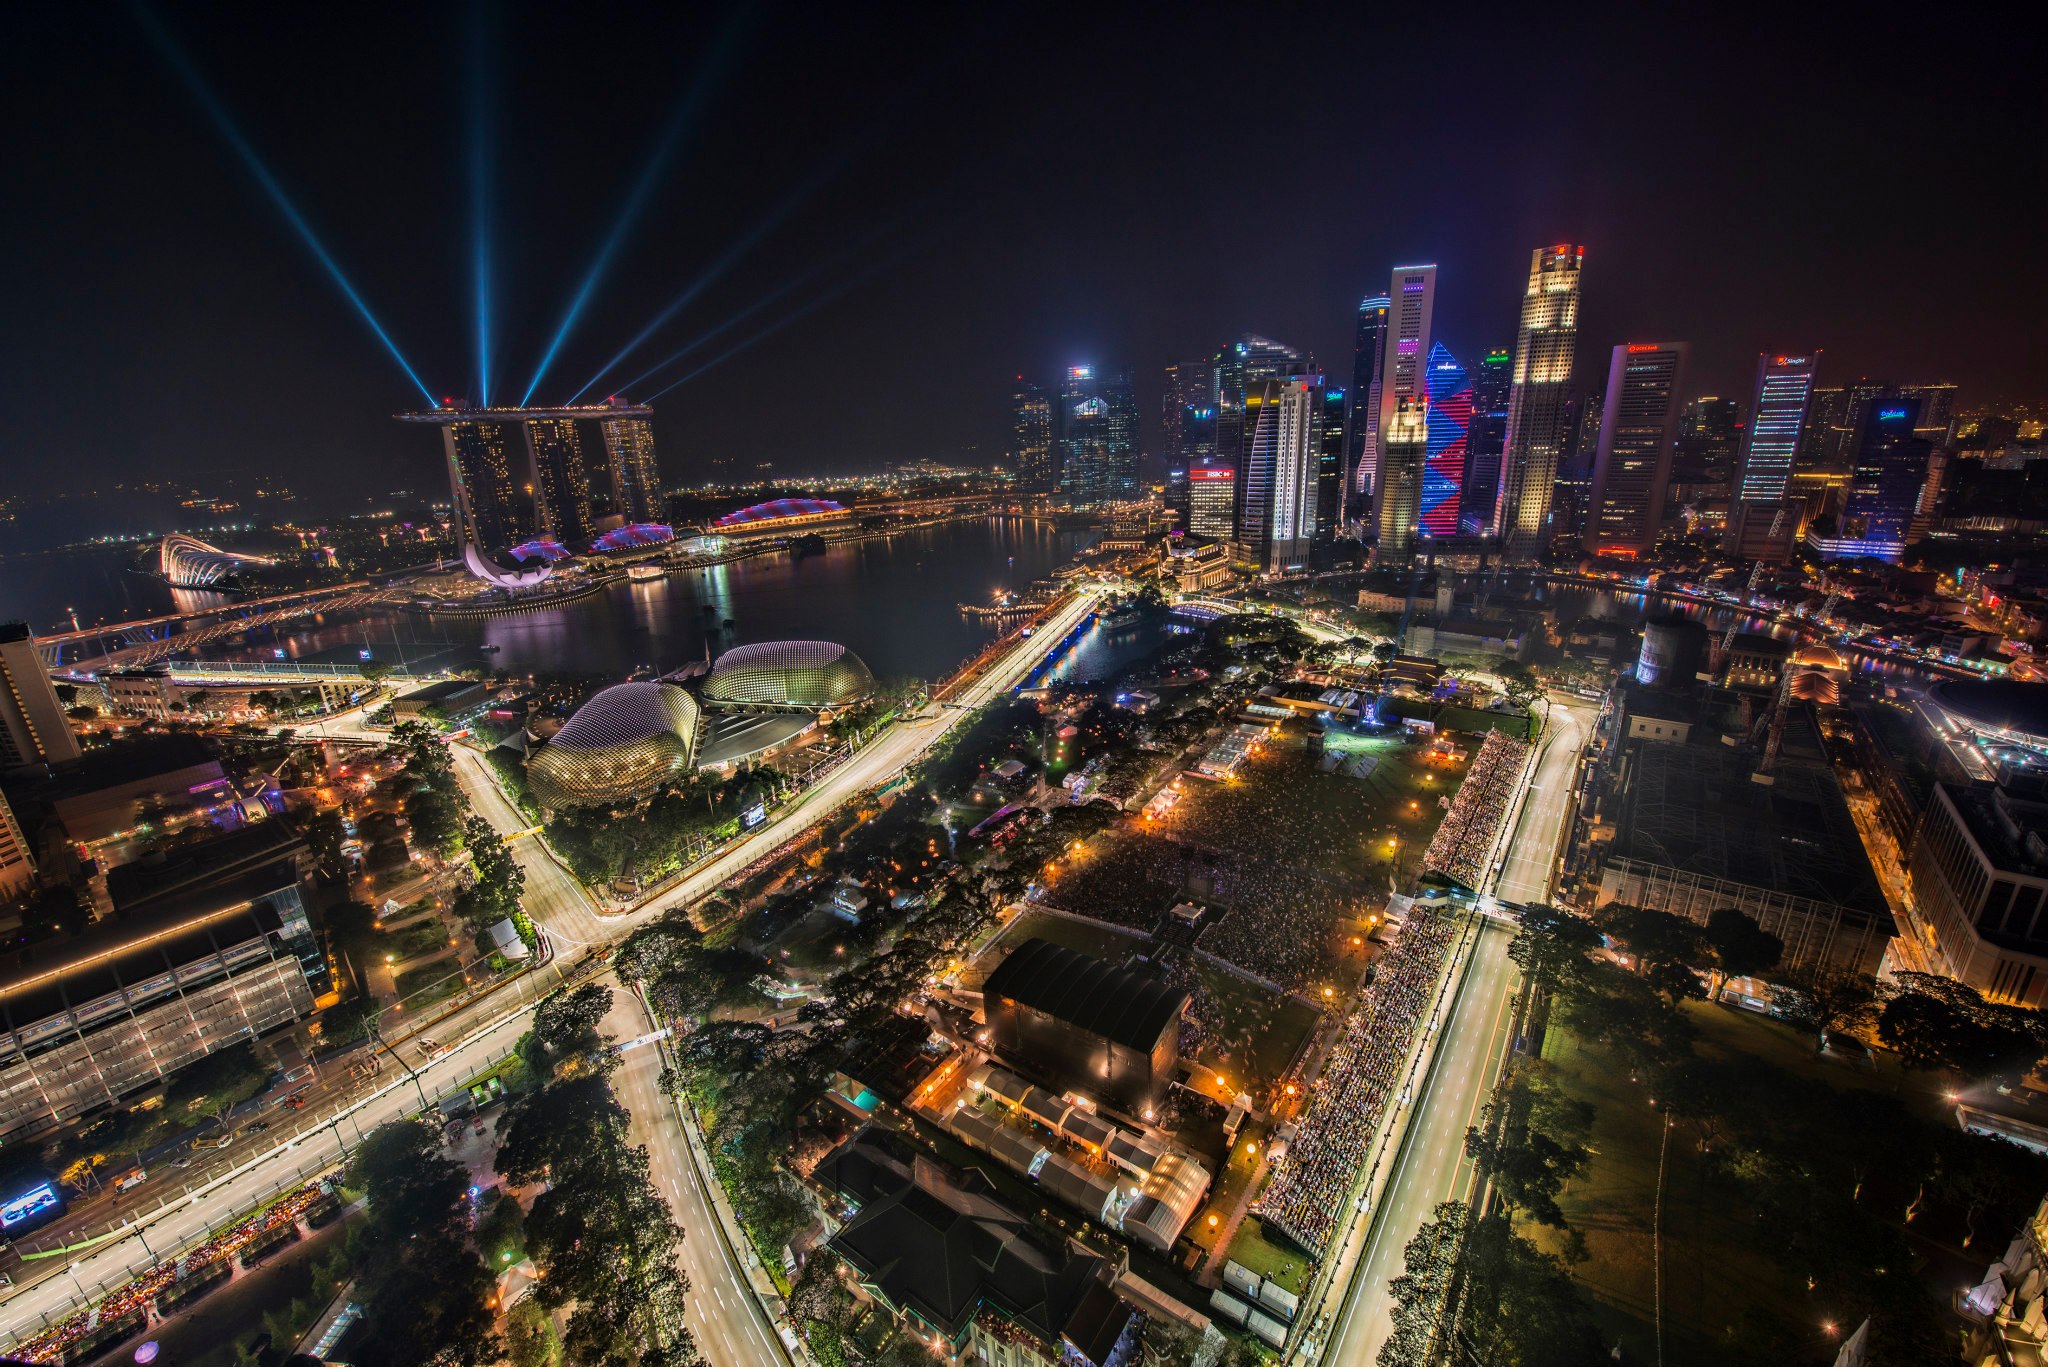 1 singapore f1 night race 2012 city skyline